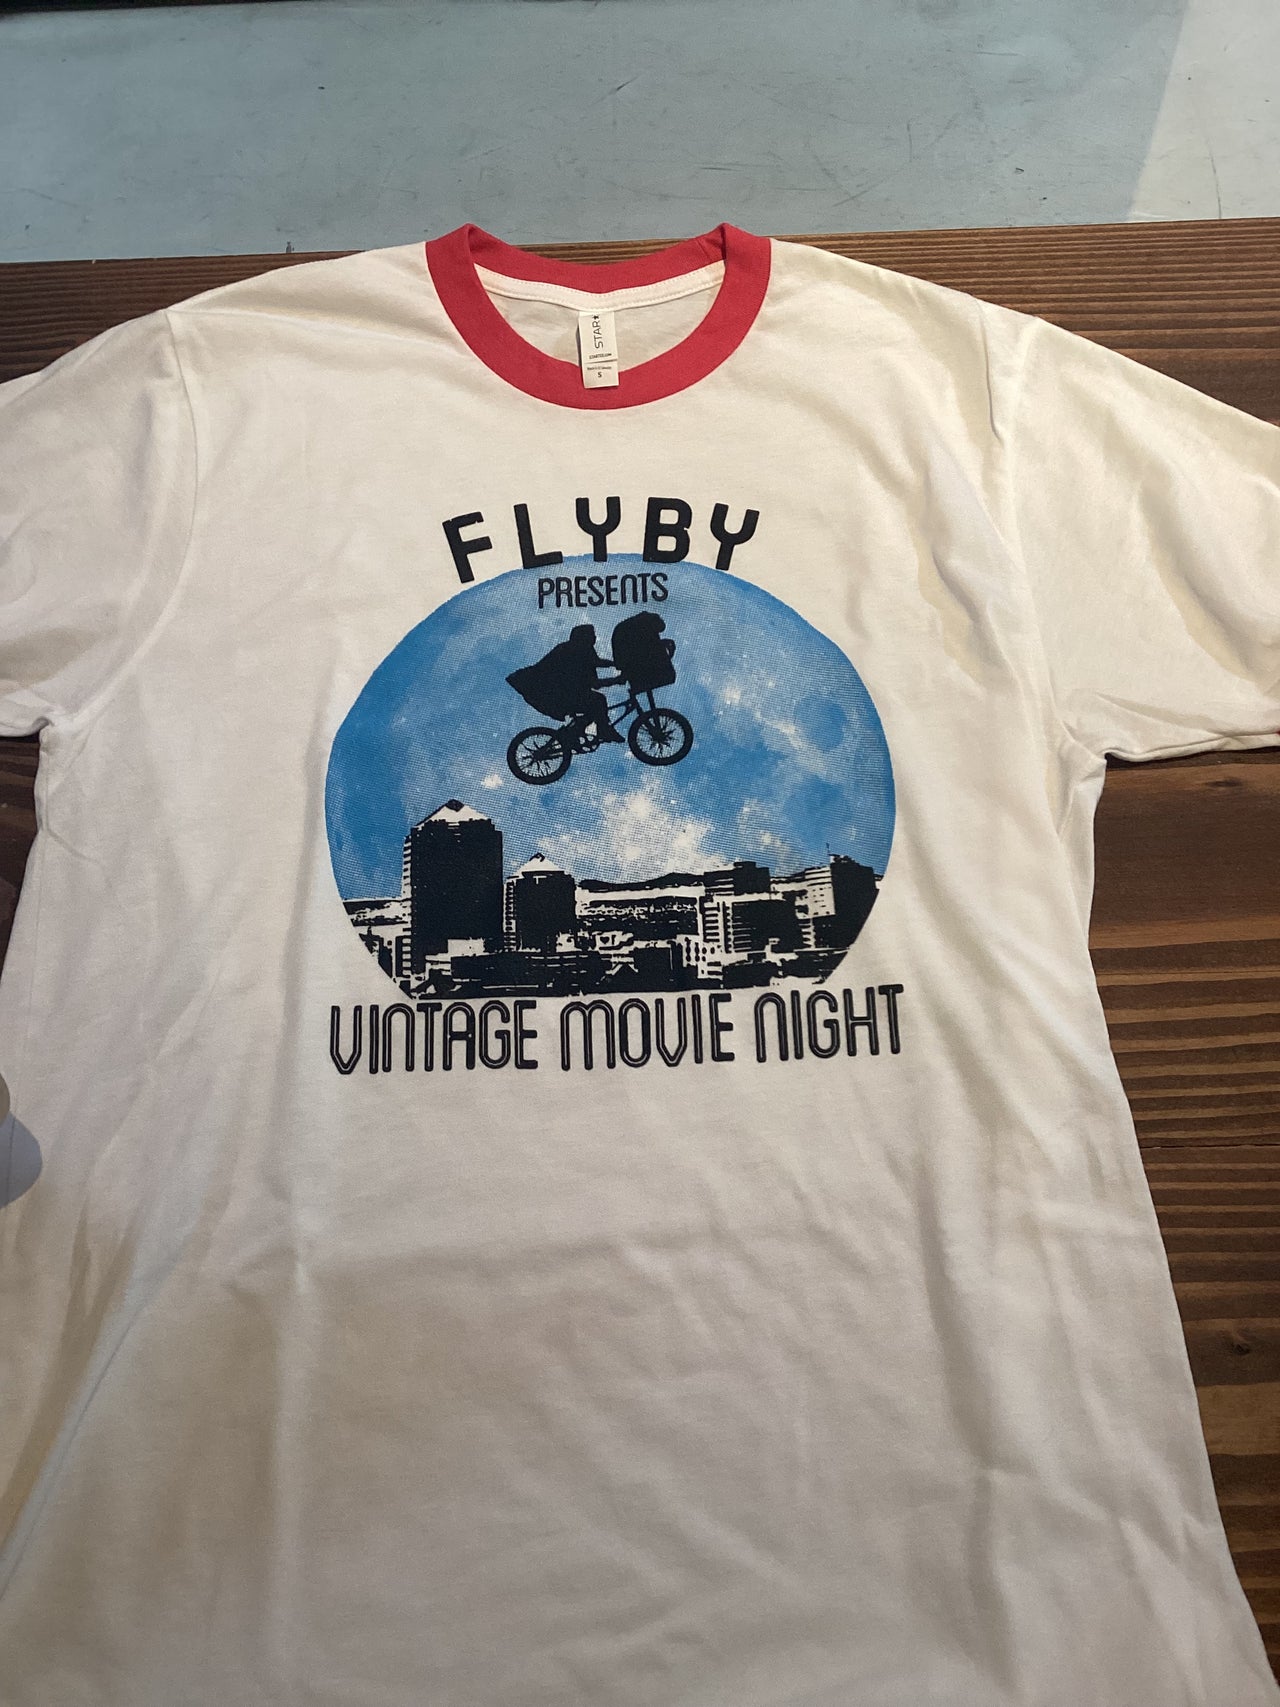 High Desert Debris - Shirt - Flyby Presents Vintage Movie Night (Medium)